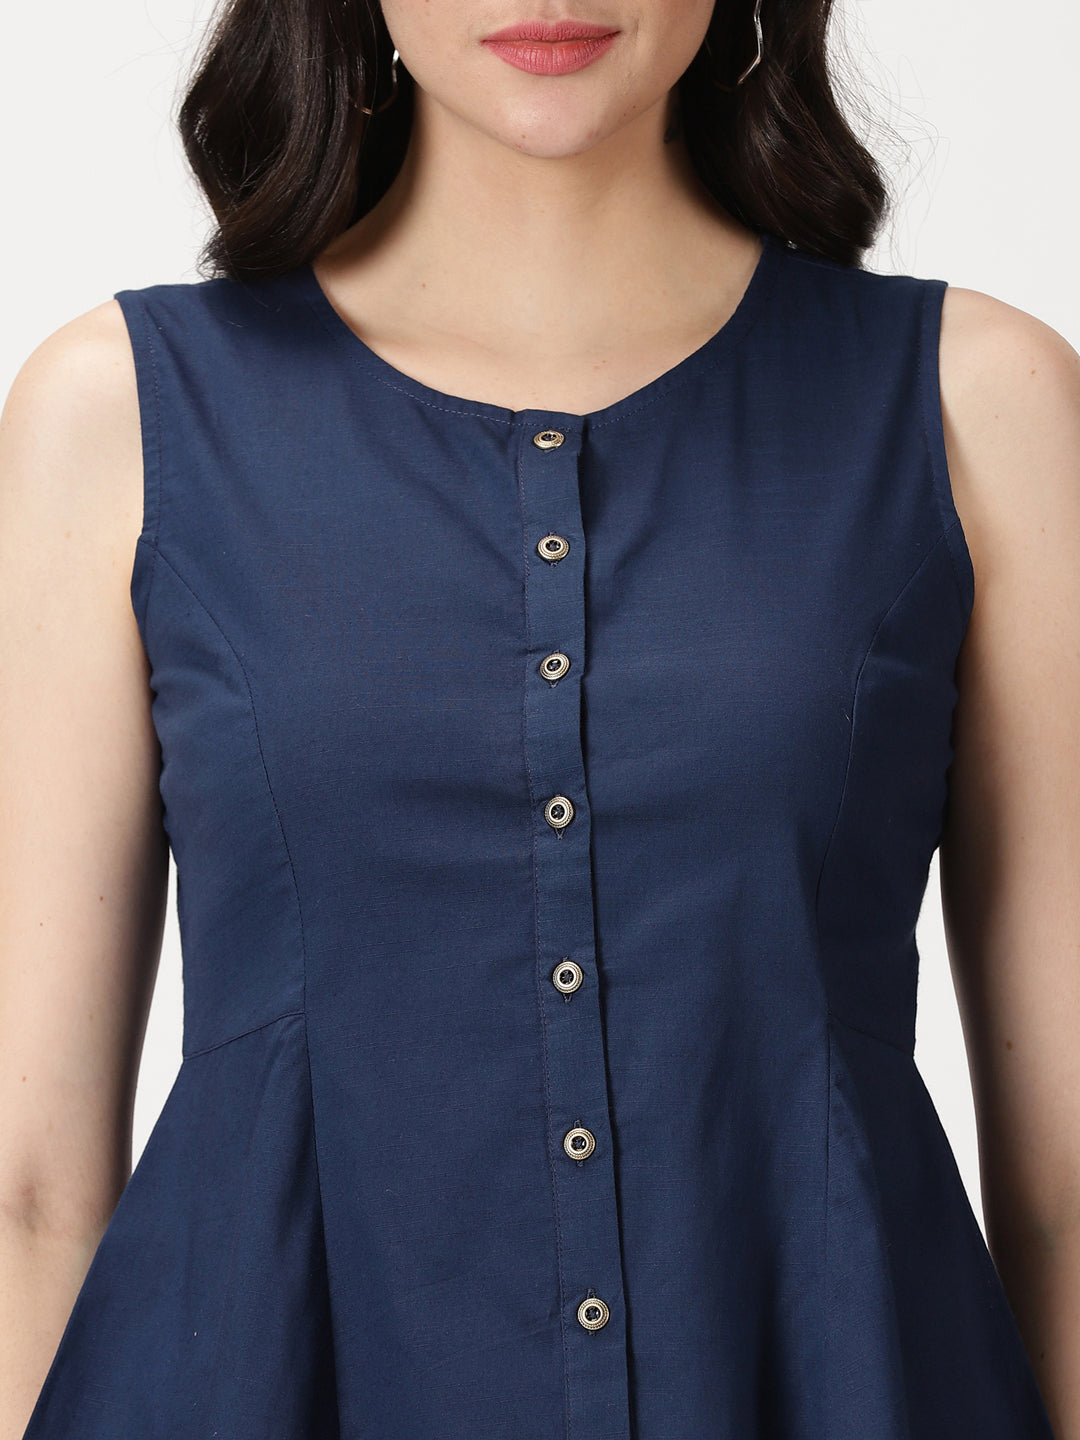 Navy Blue Cotton Linen Button-Down A-Line Top